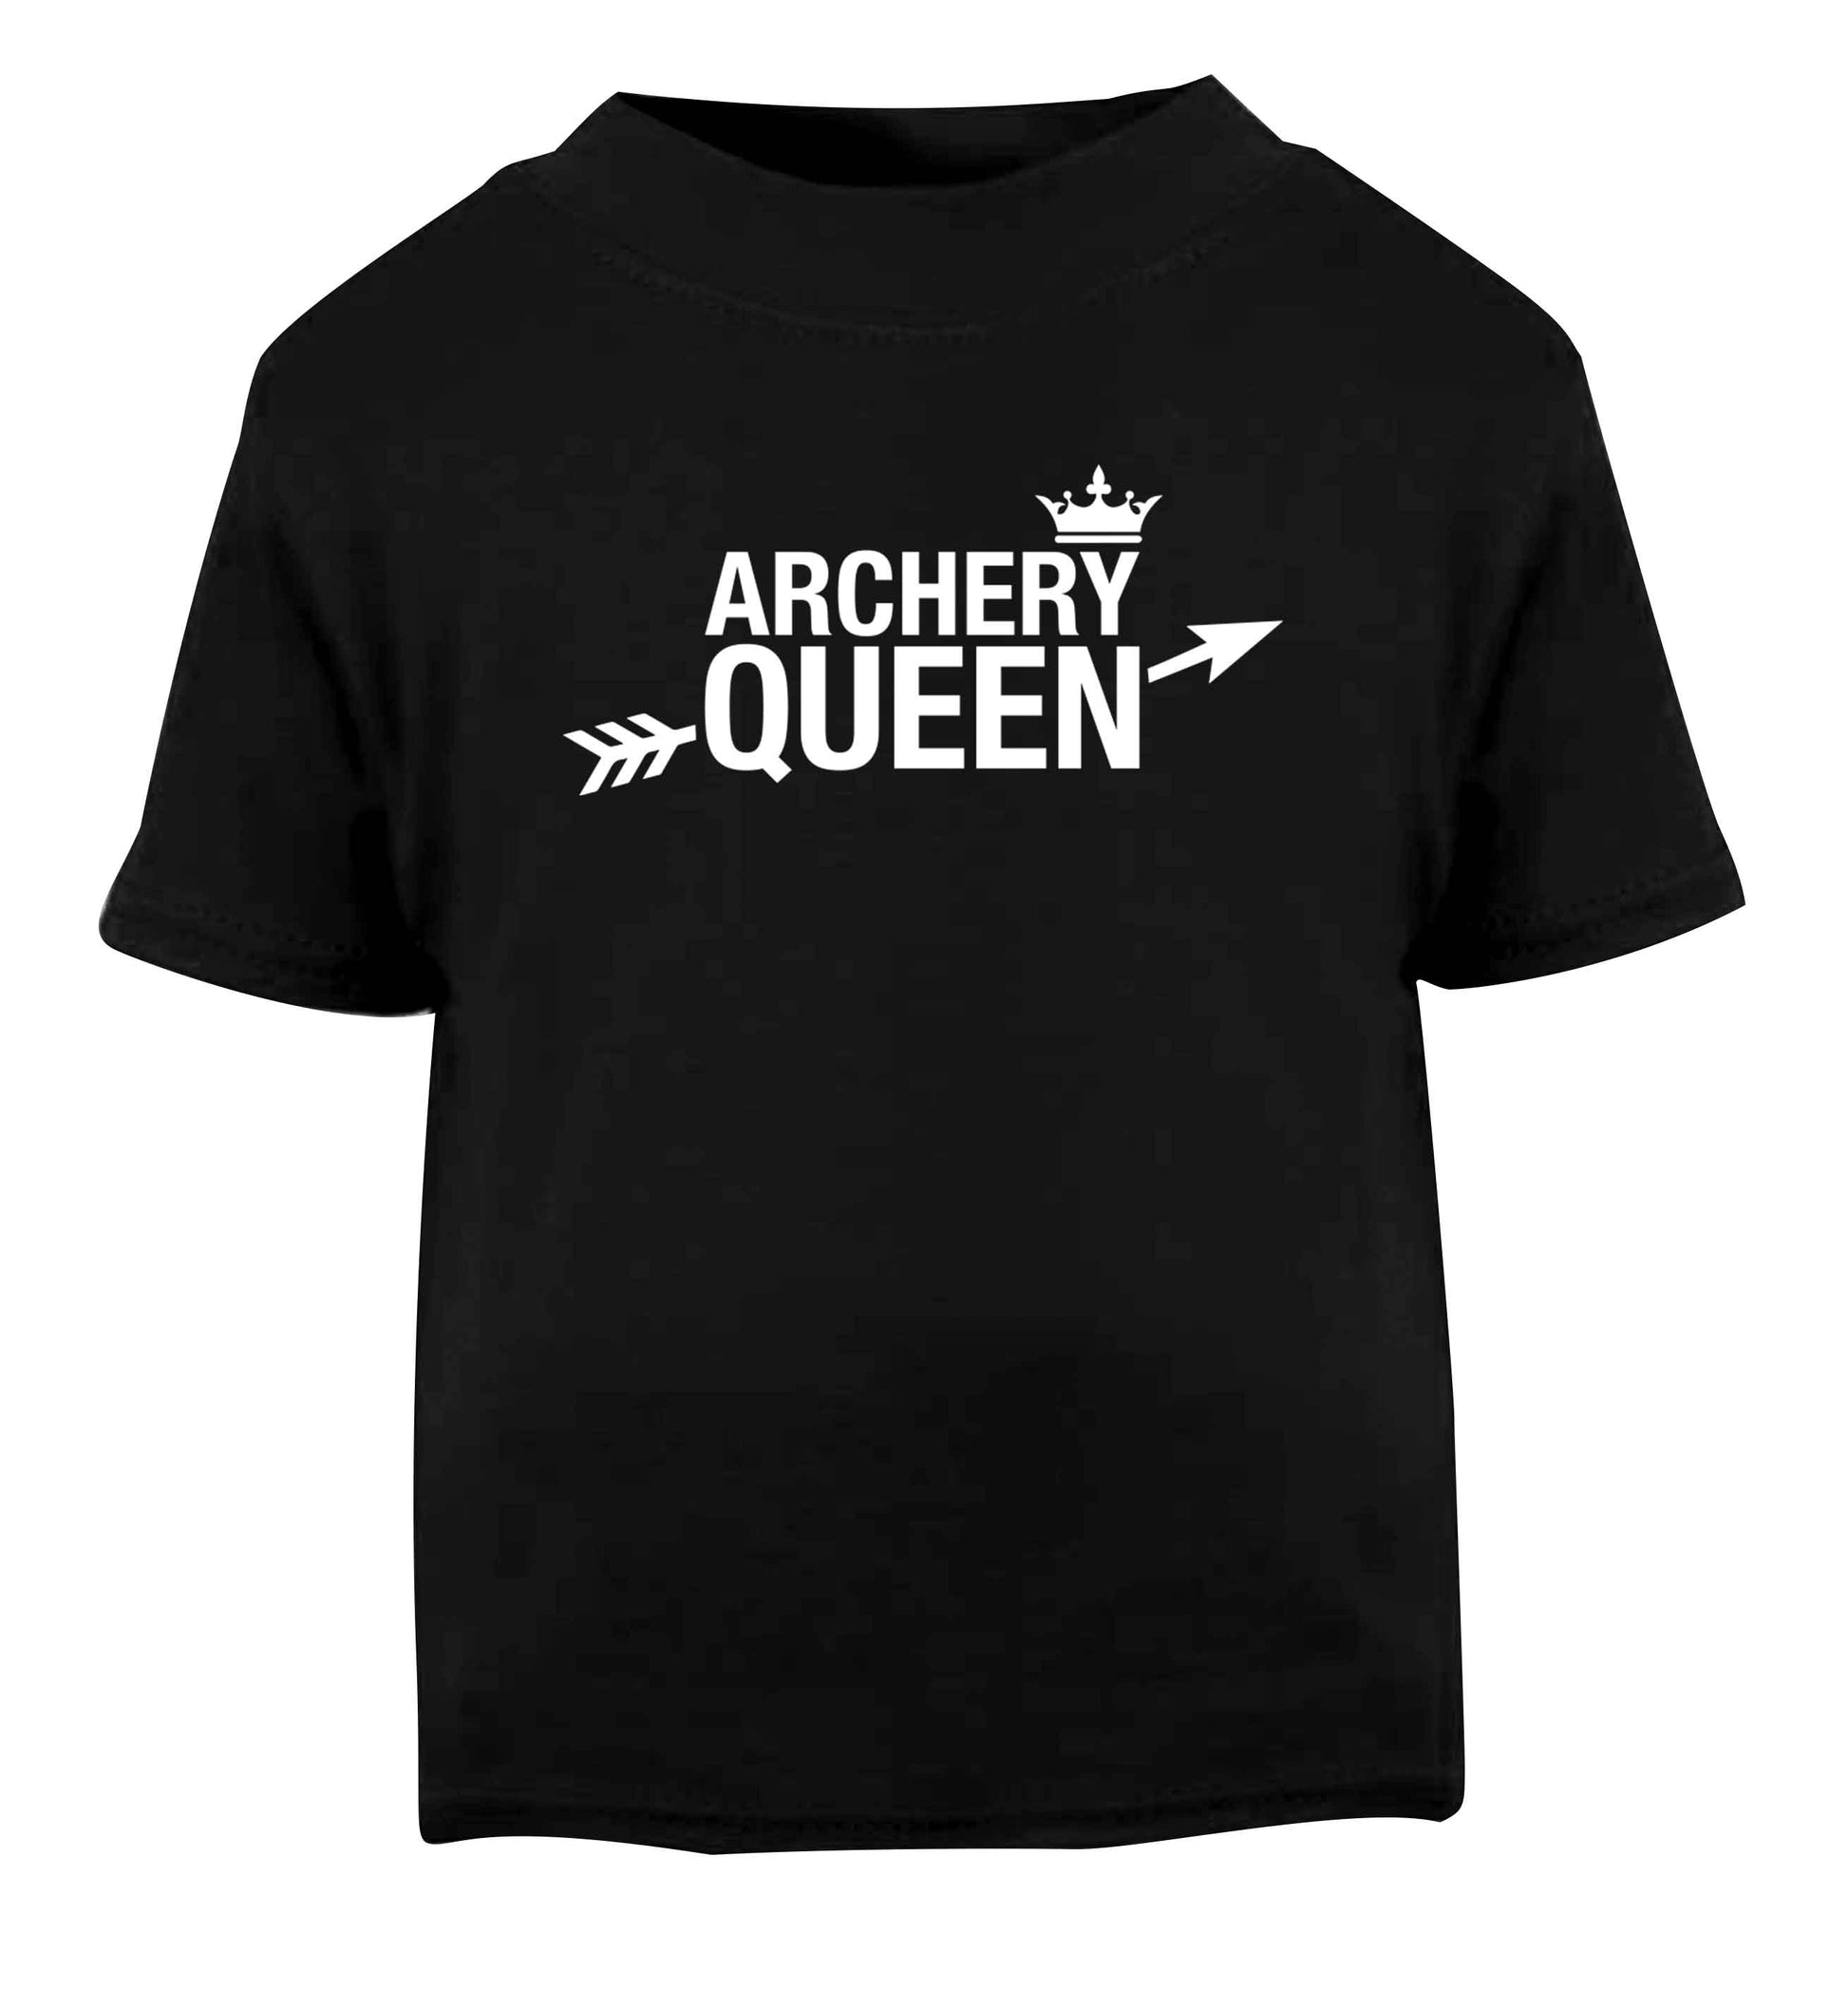 Archery queen Black Baby Toddler Tshirt 2 years